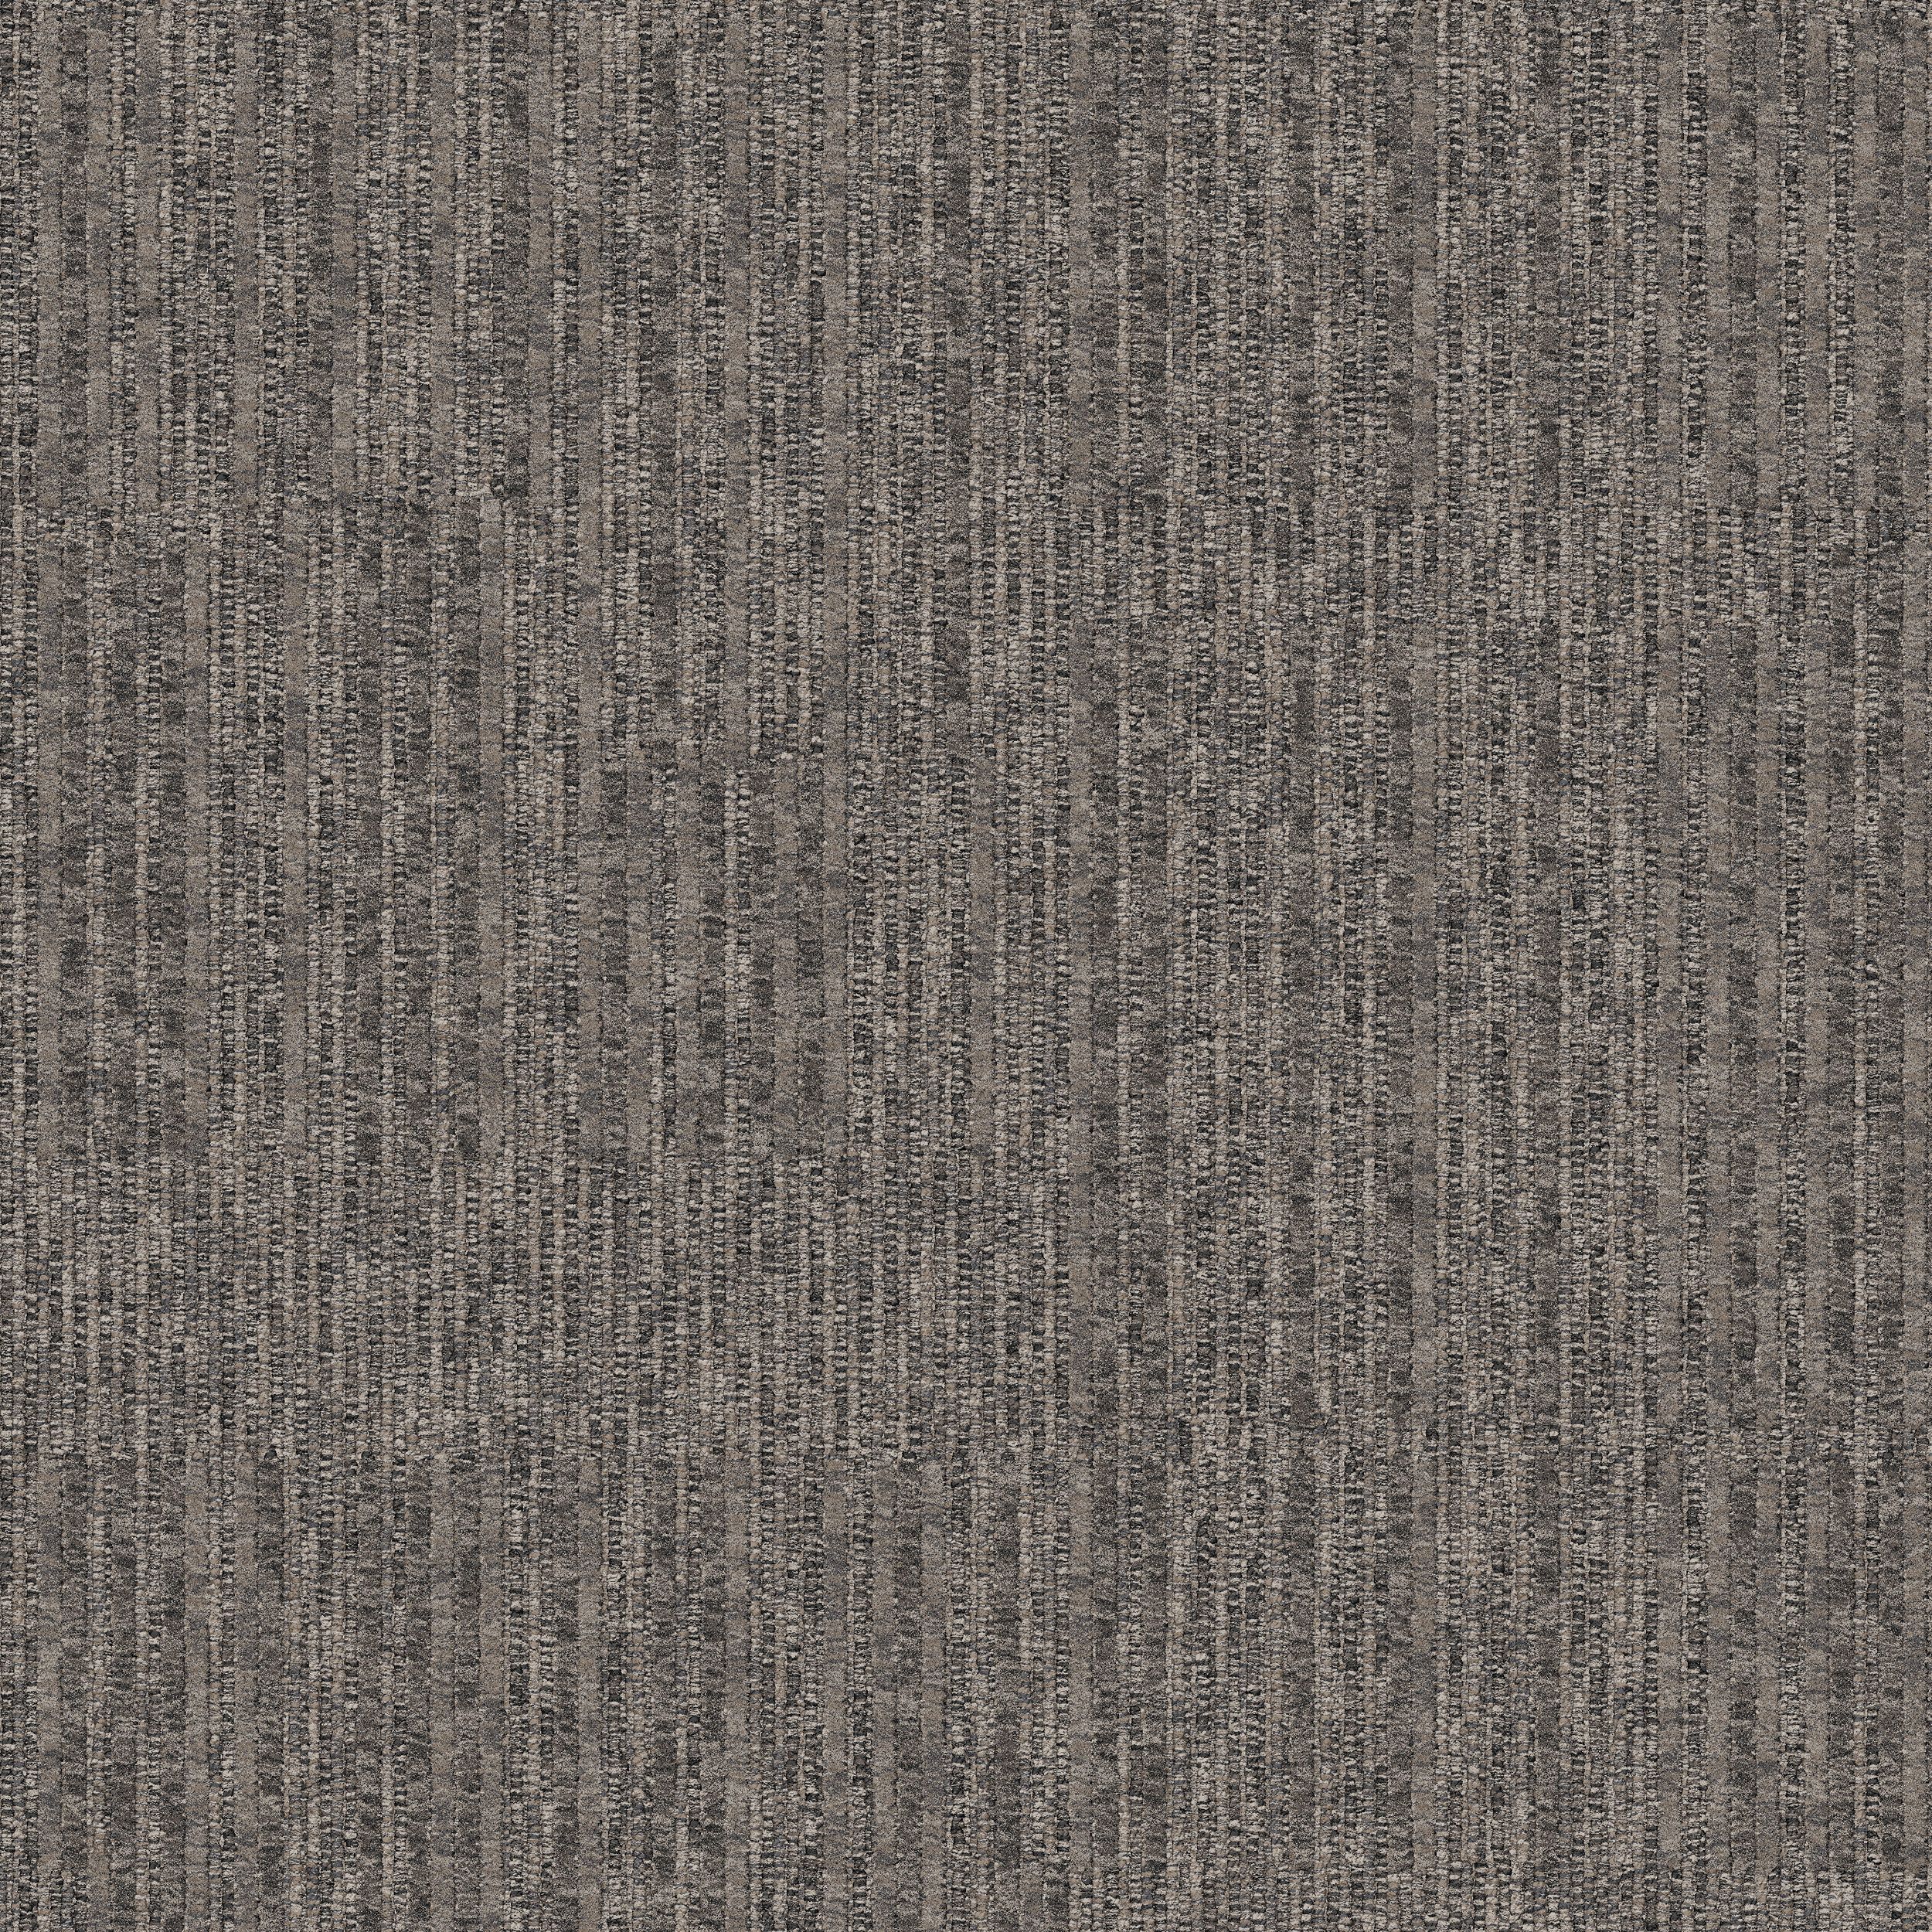 Equilibrium Carpet Tile In Persistence afbeeldingnummer 9